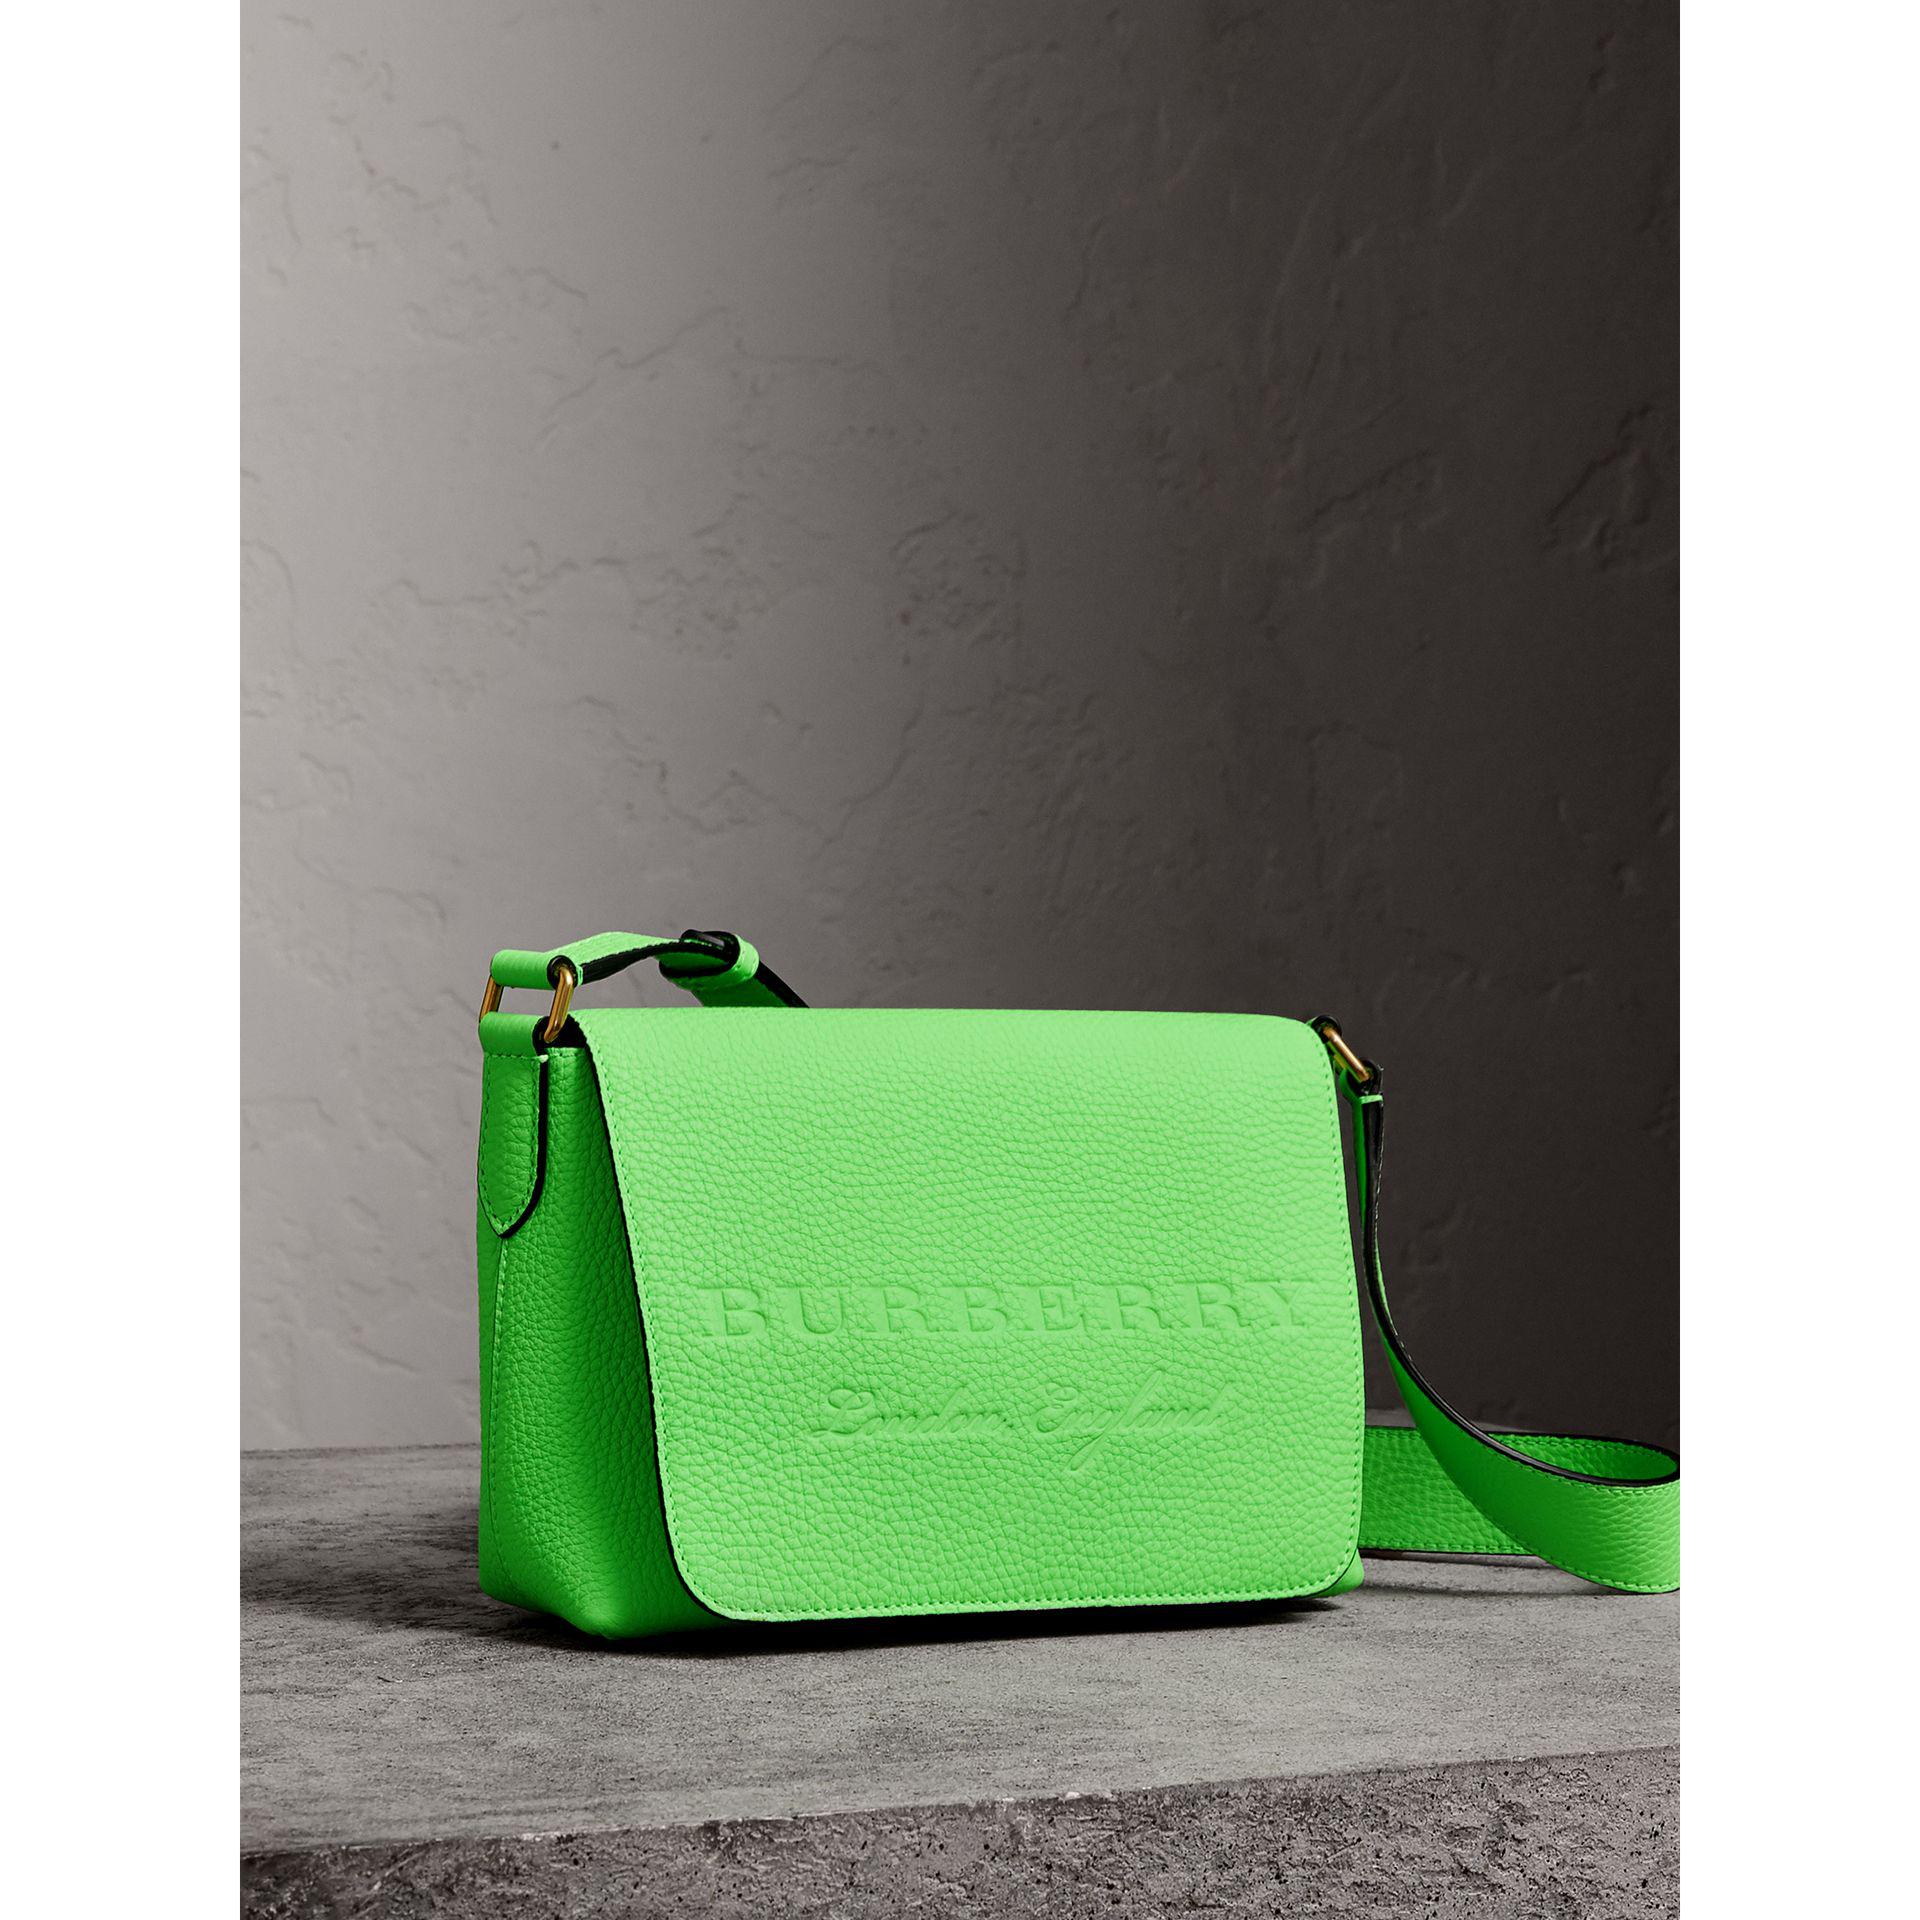 Burberry Olive Green Leather Studded Lock Messenger Bag Burberry